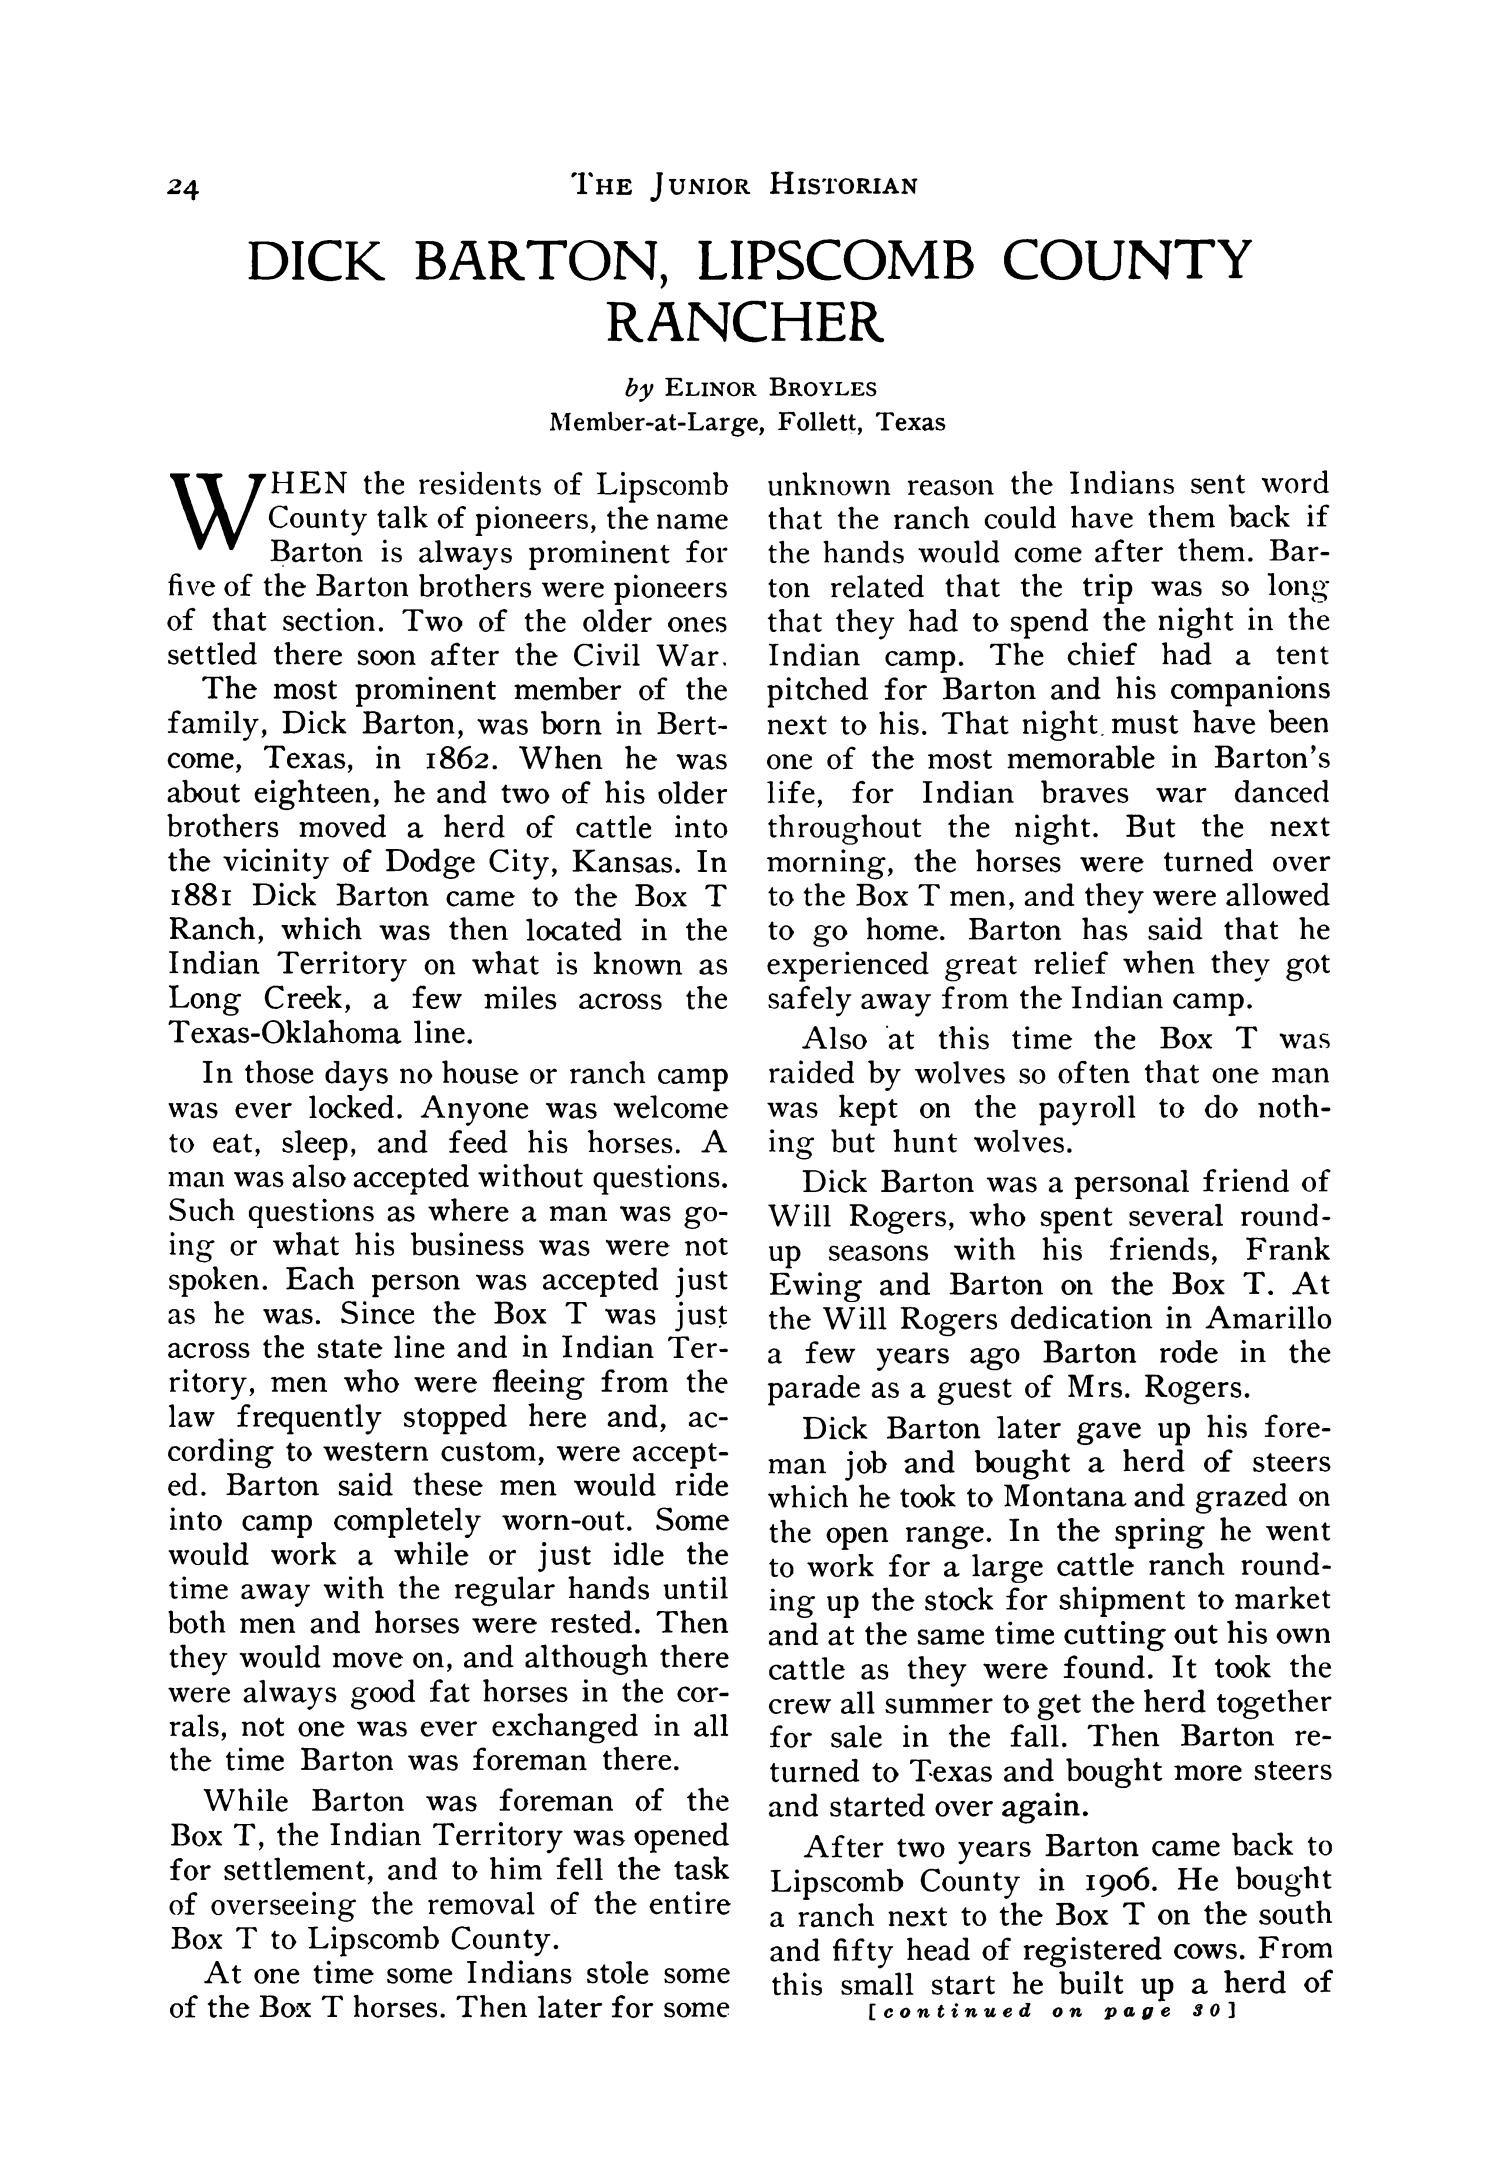 The Junior Historian, Volume 12, Number 3, December 1951
                                                
                                                    24
                                                